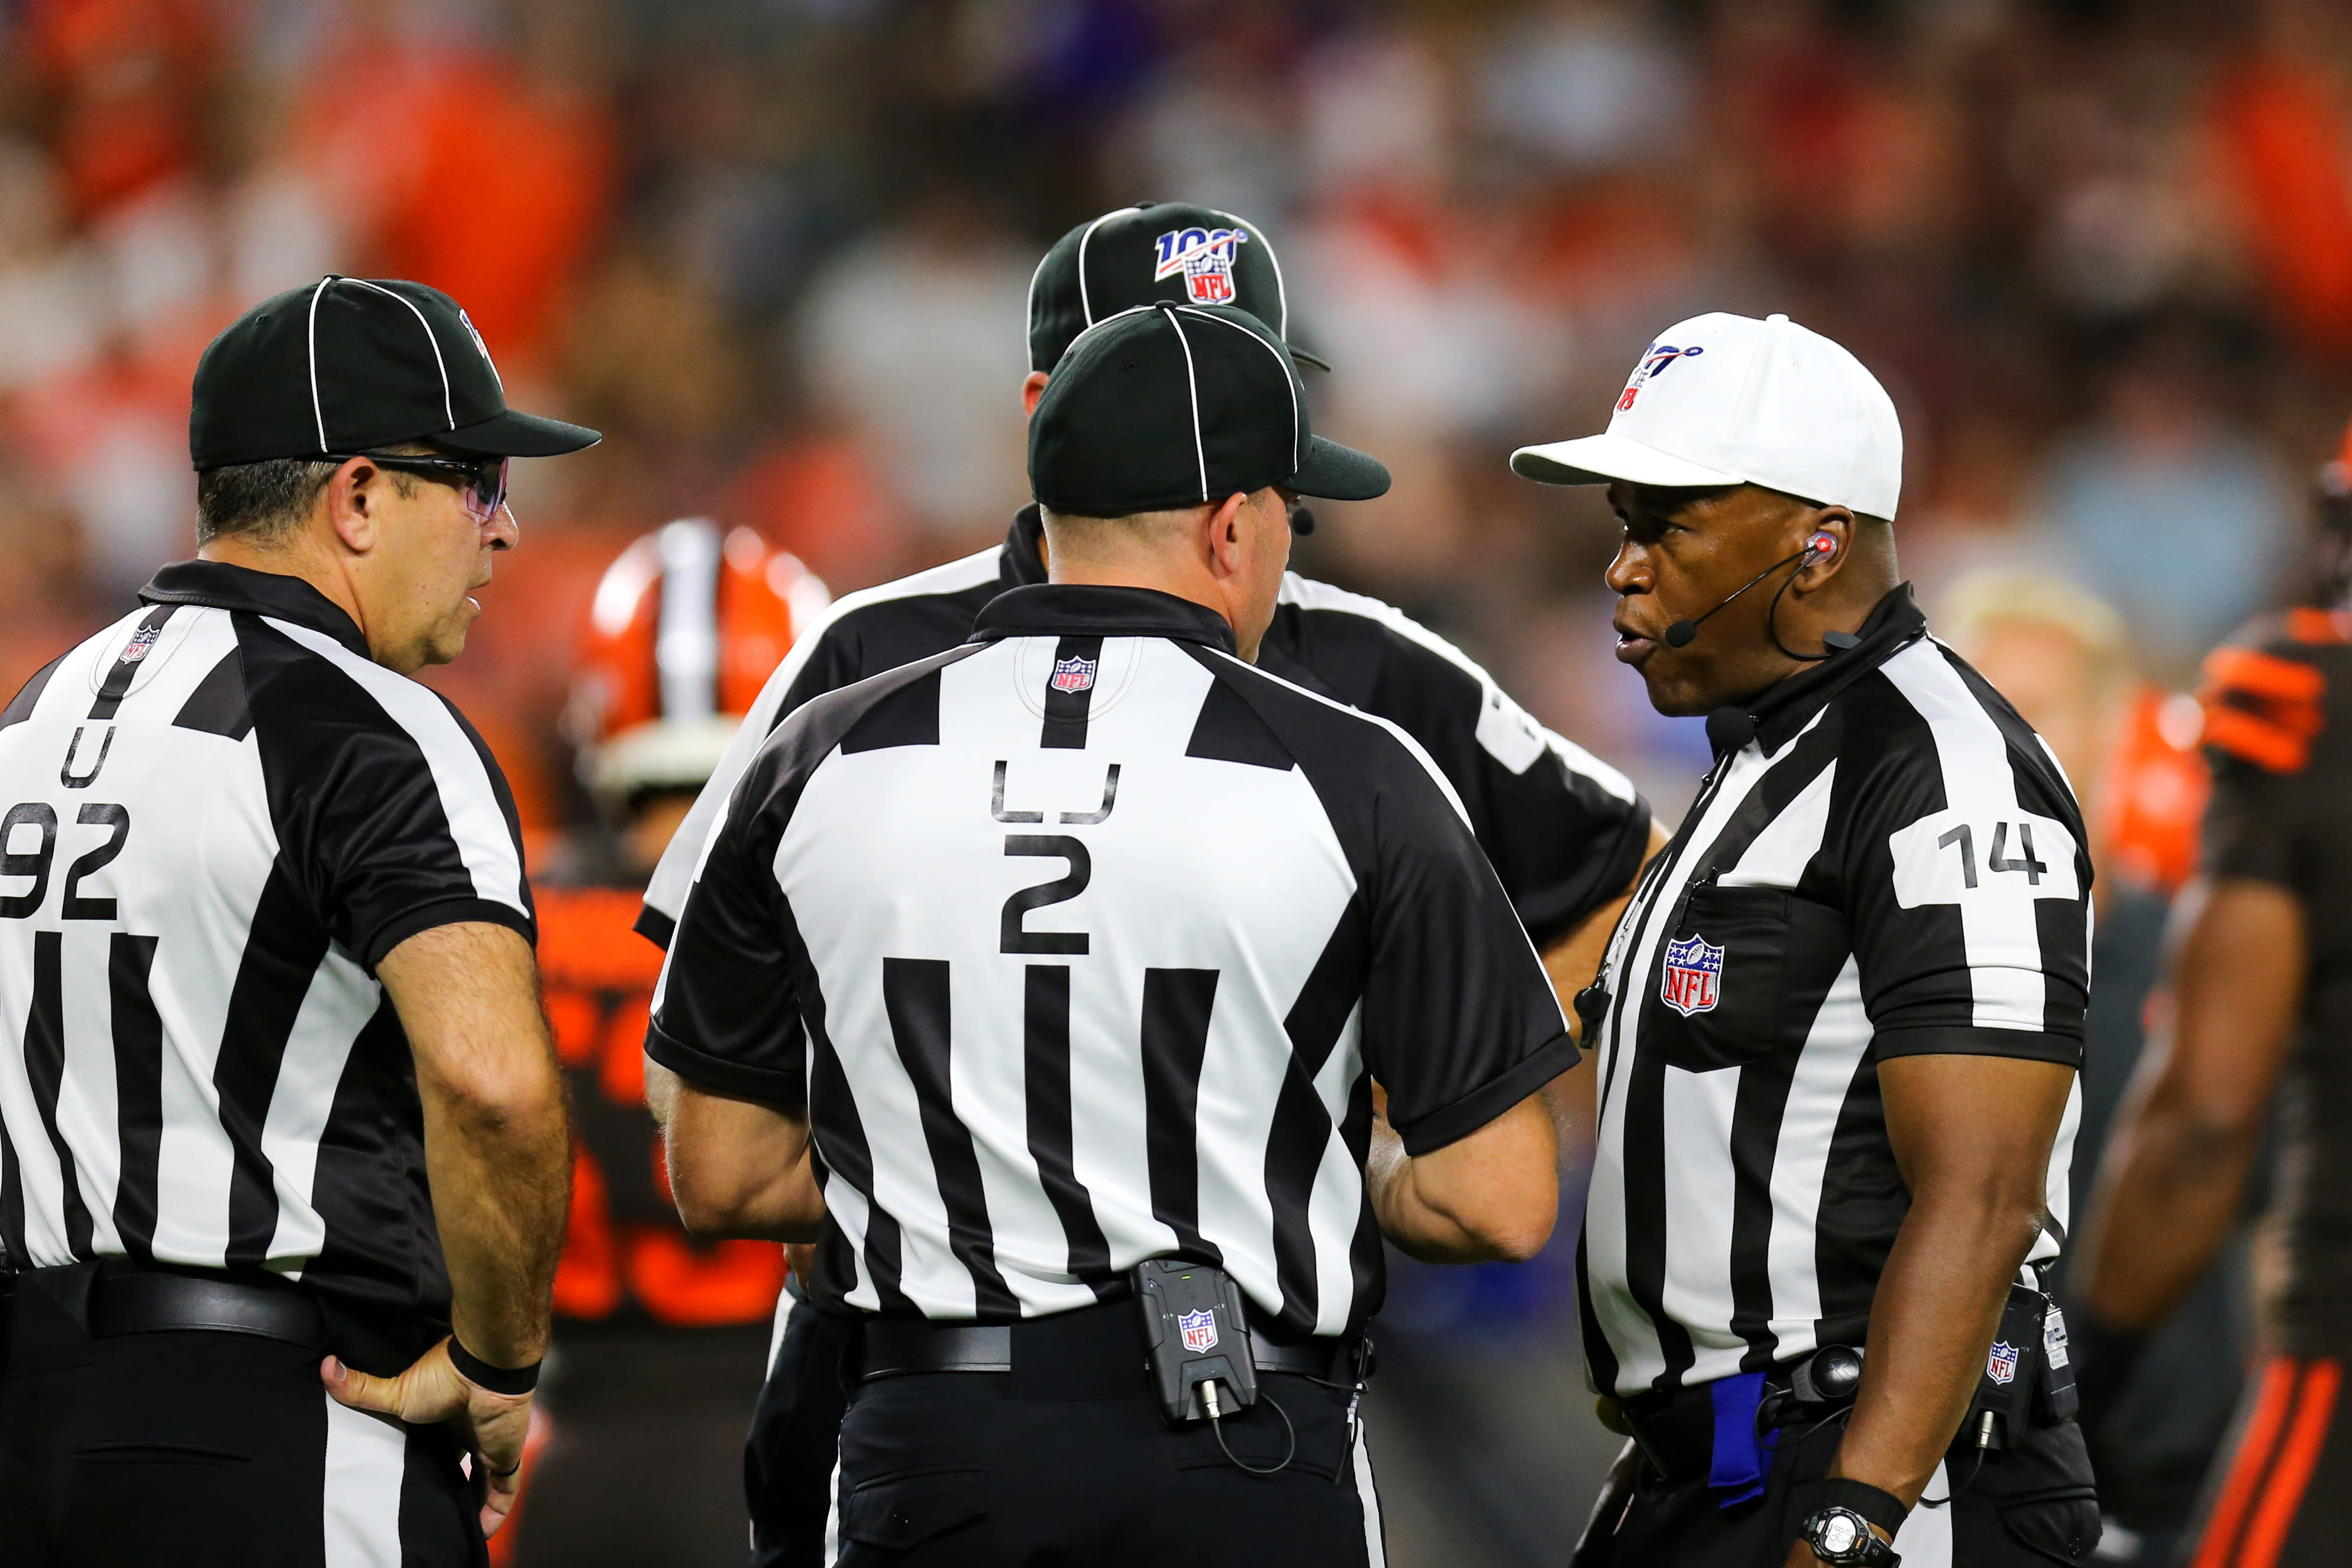 NFL, referees reach new CBA through 2025 season